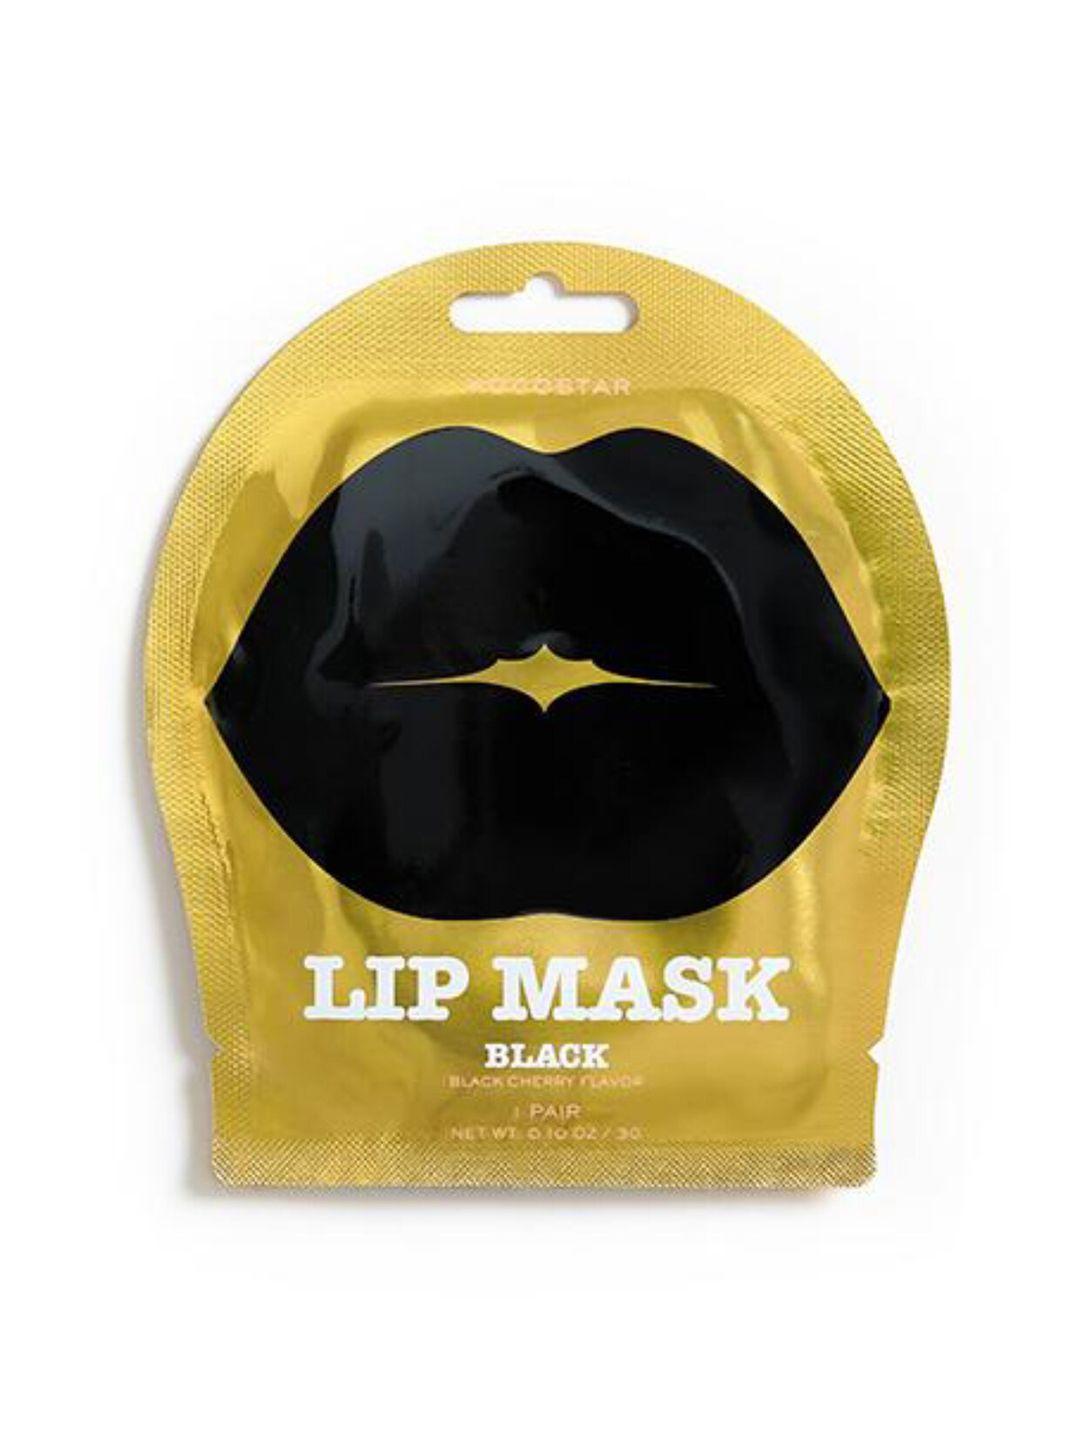 kocostar soothing & glow black cherry lip mask - 3 g